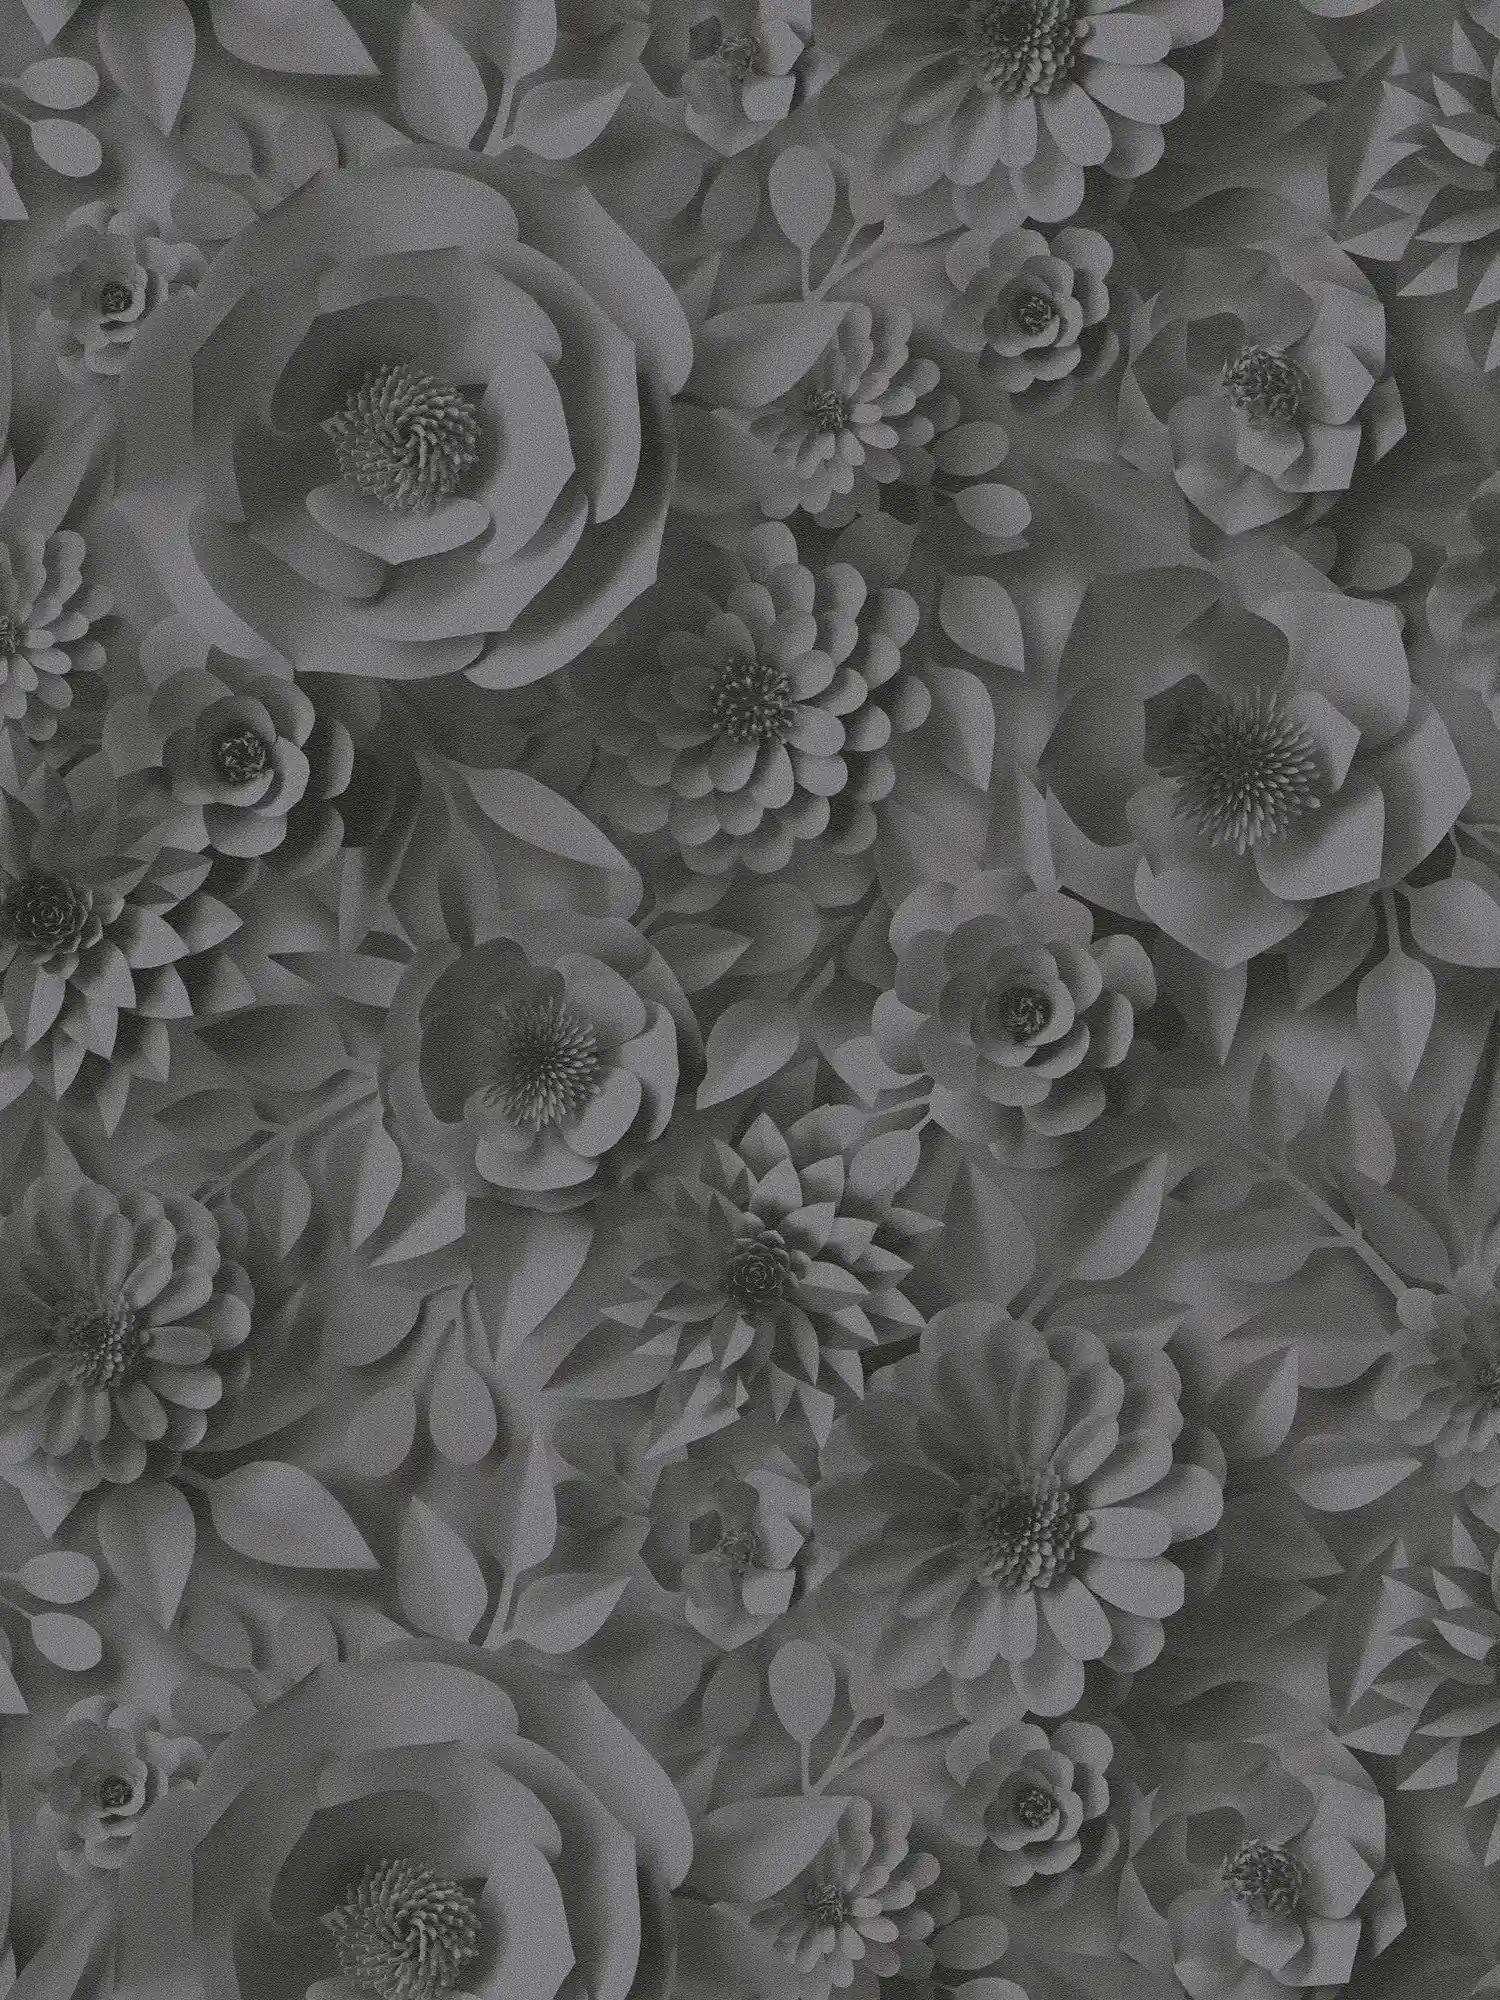 3D wallpaper flowers of paper - grey, black
